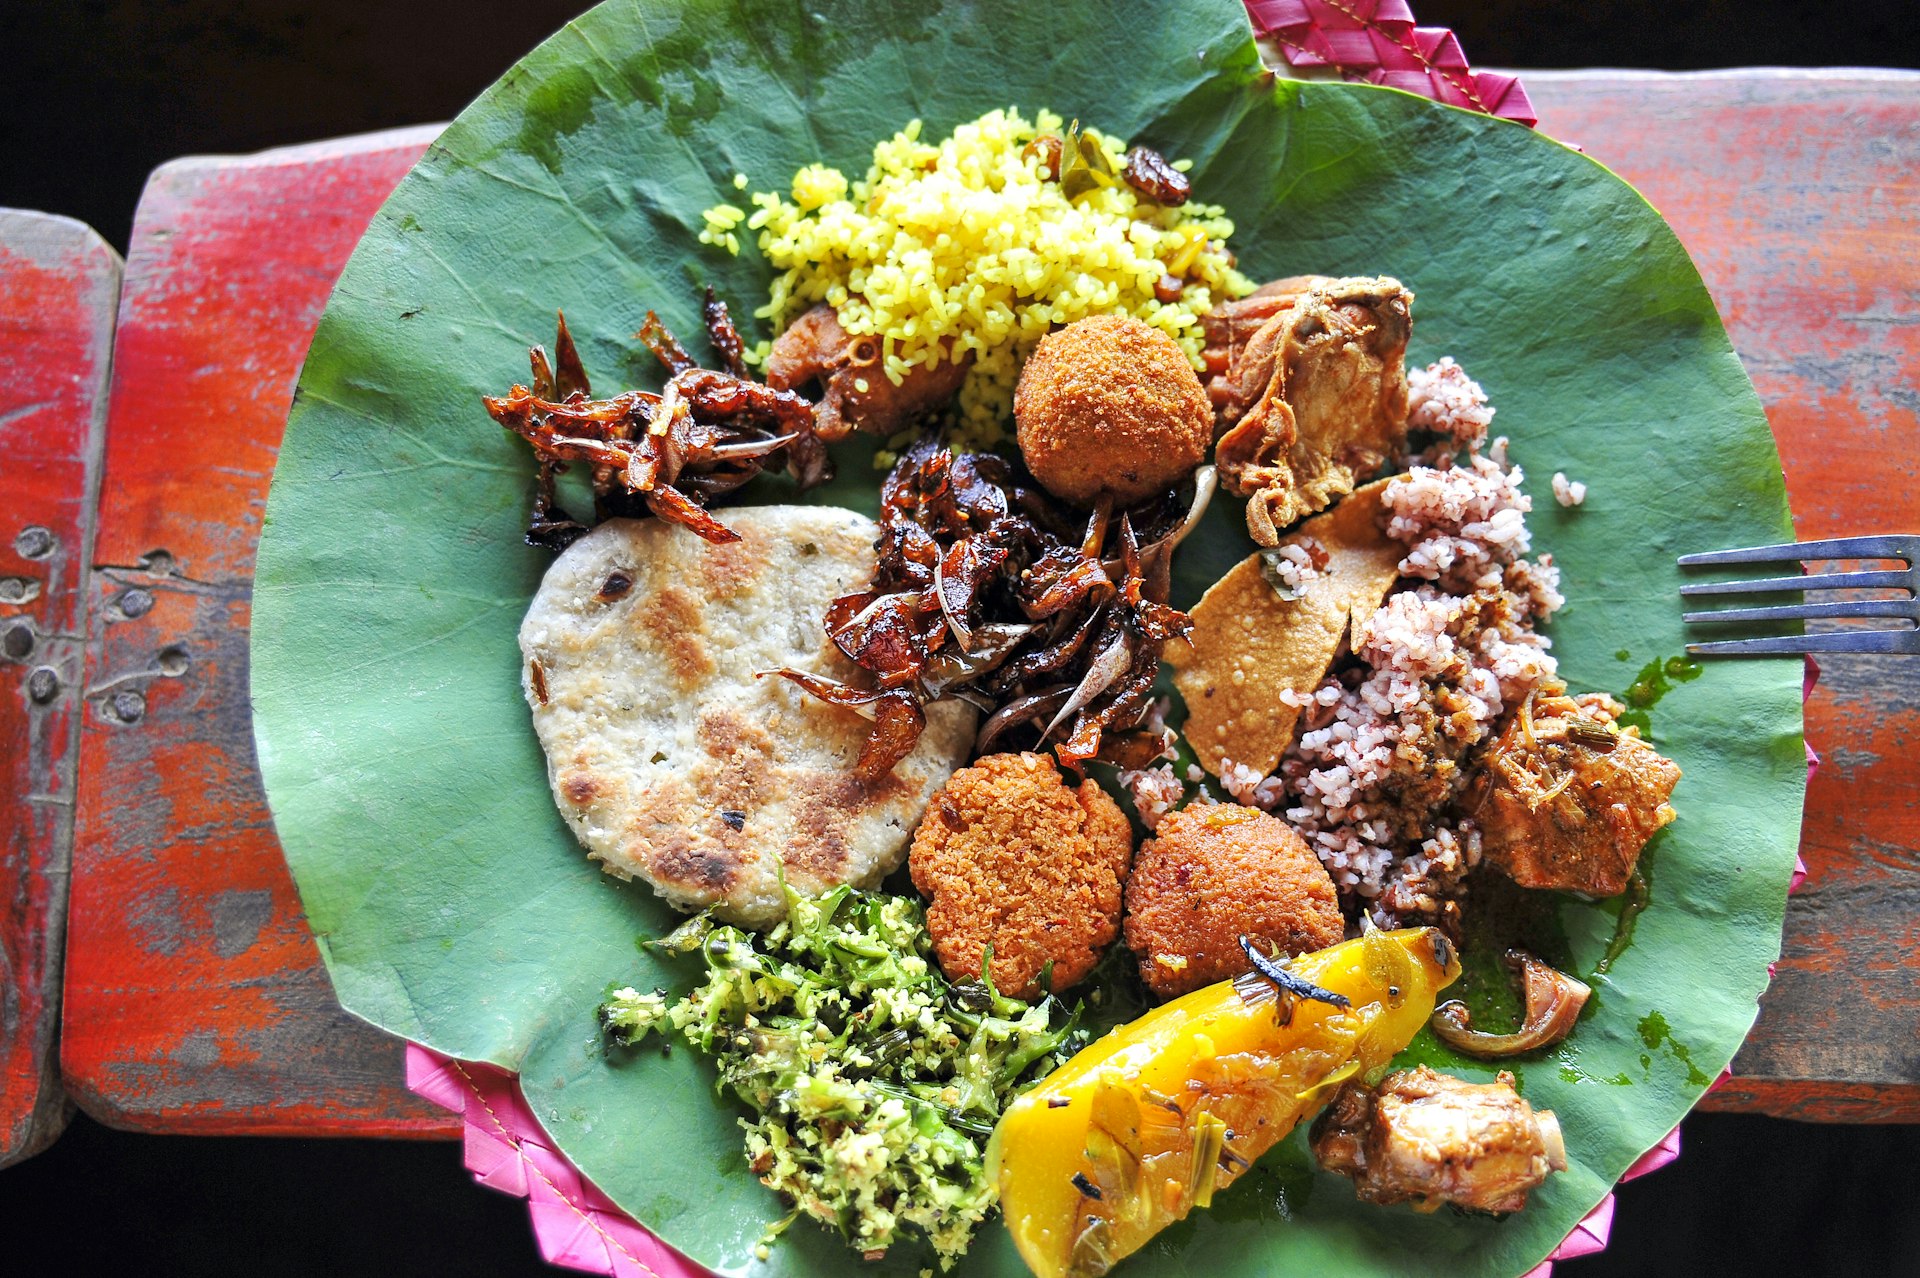 Traditional vegetarian food from Sri Lanka served on a leaf